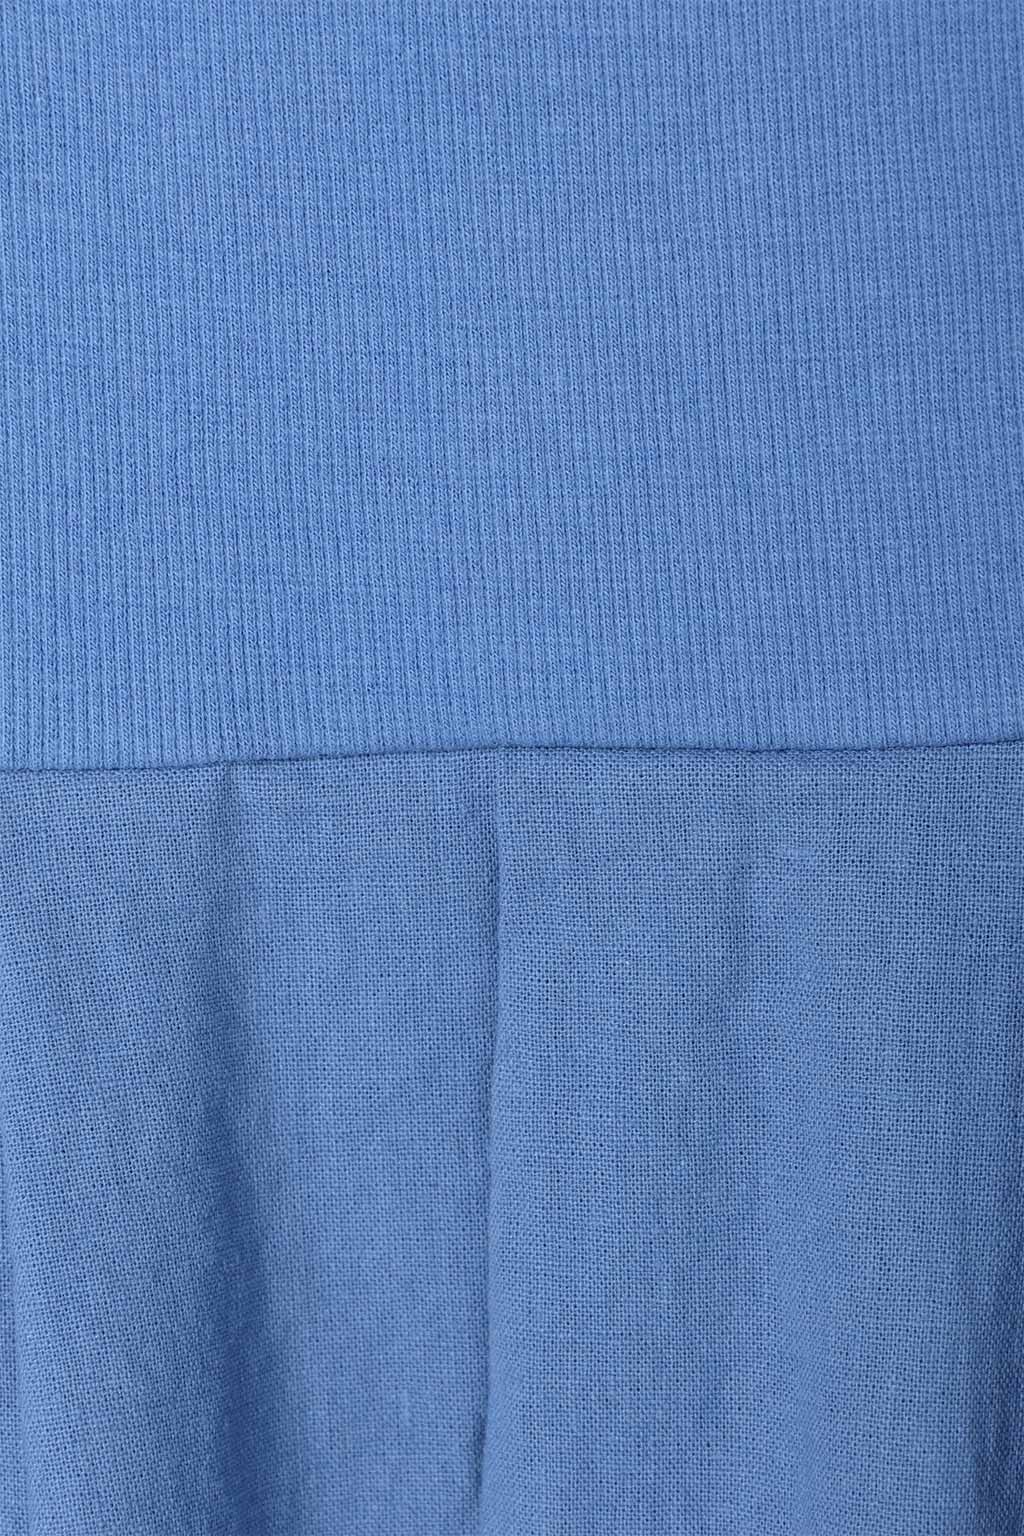 puff-sleeve-cropped-top&dress-set-blue-19